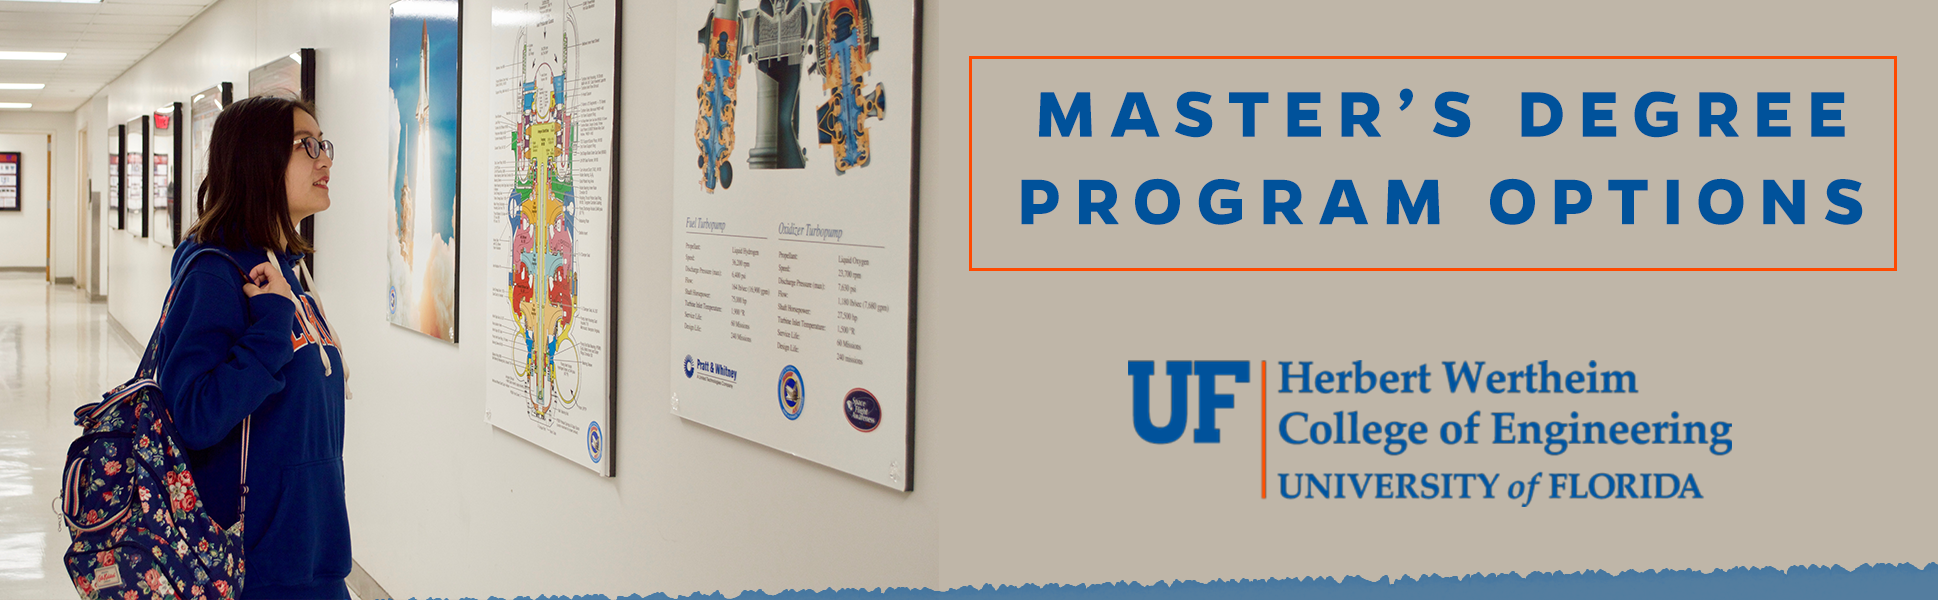 Master's Degree Programs - Graduate Student Affairs